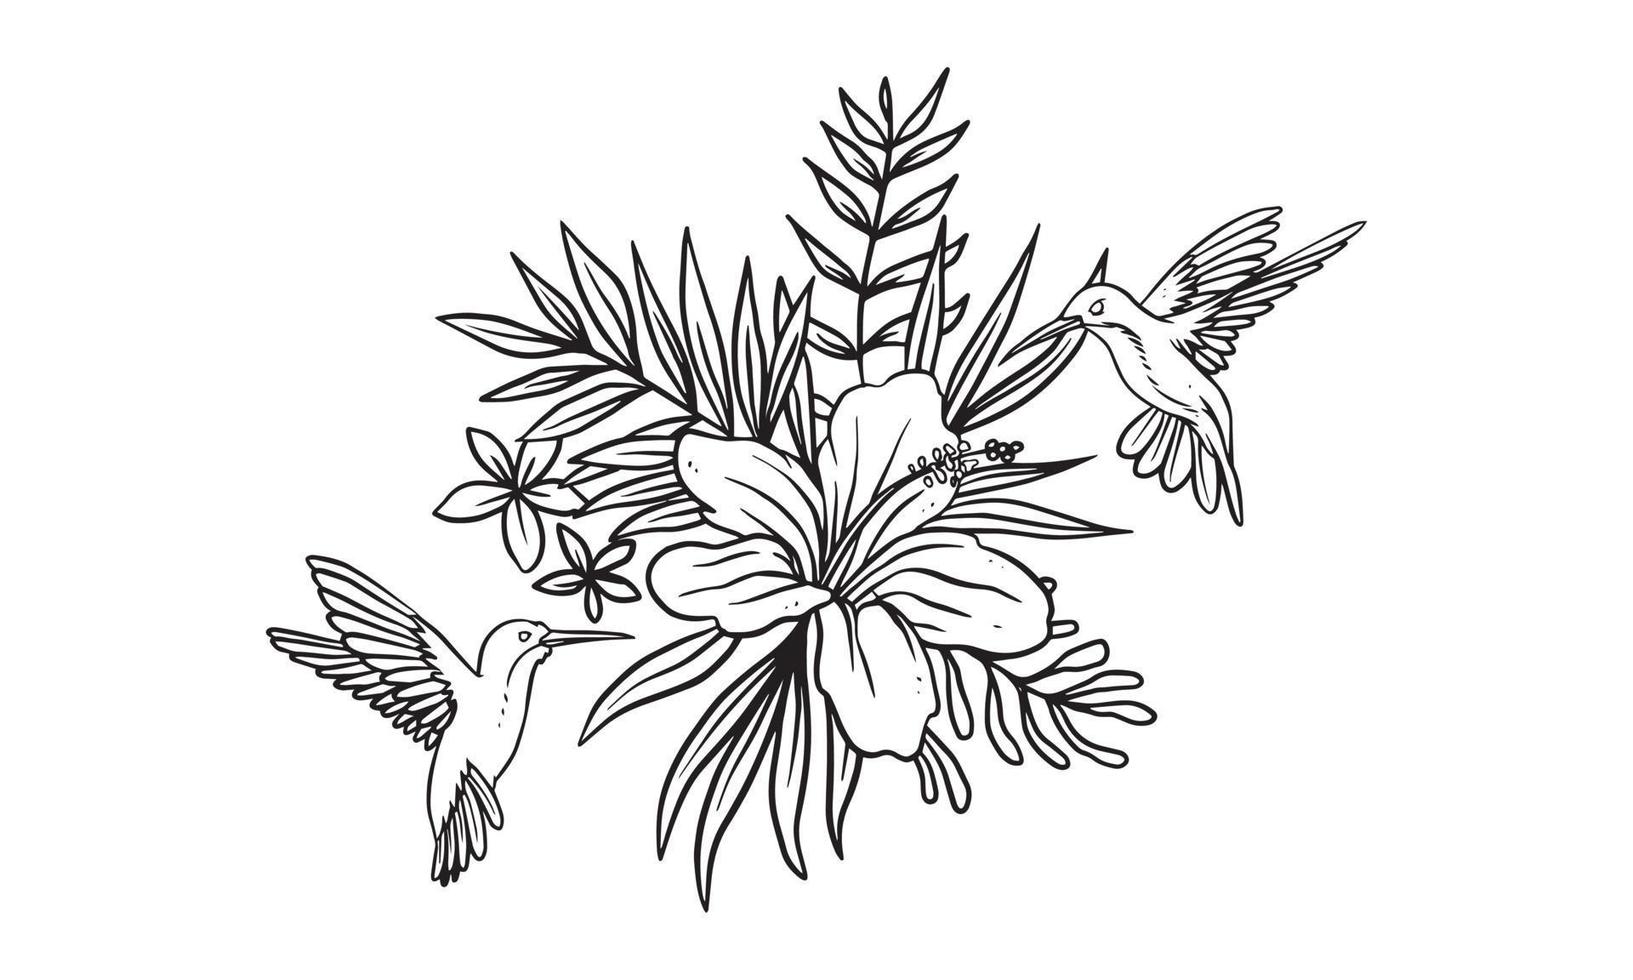 Wreath with bird eating honey, vector hand drawn illustration